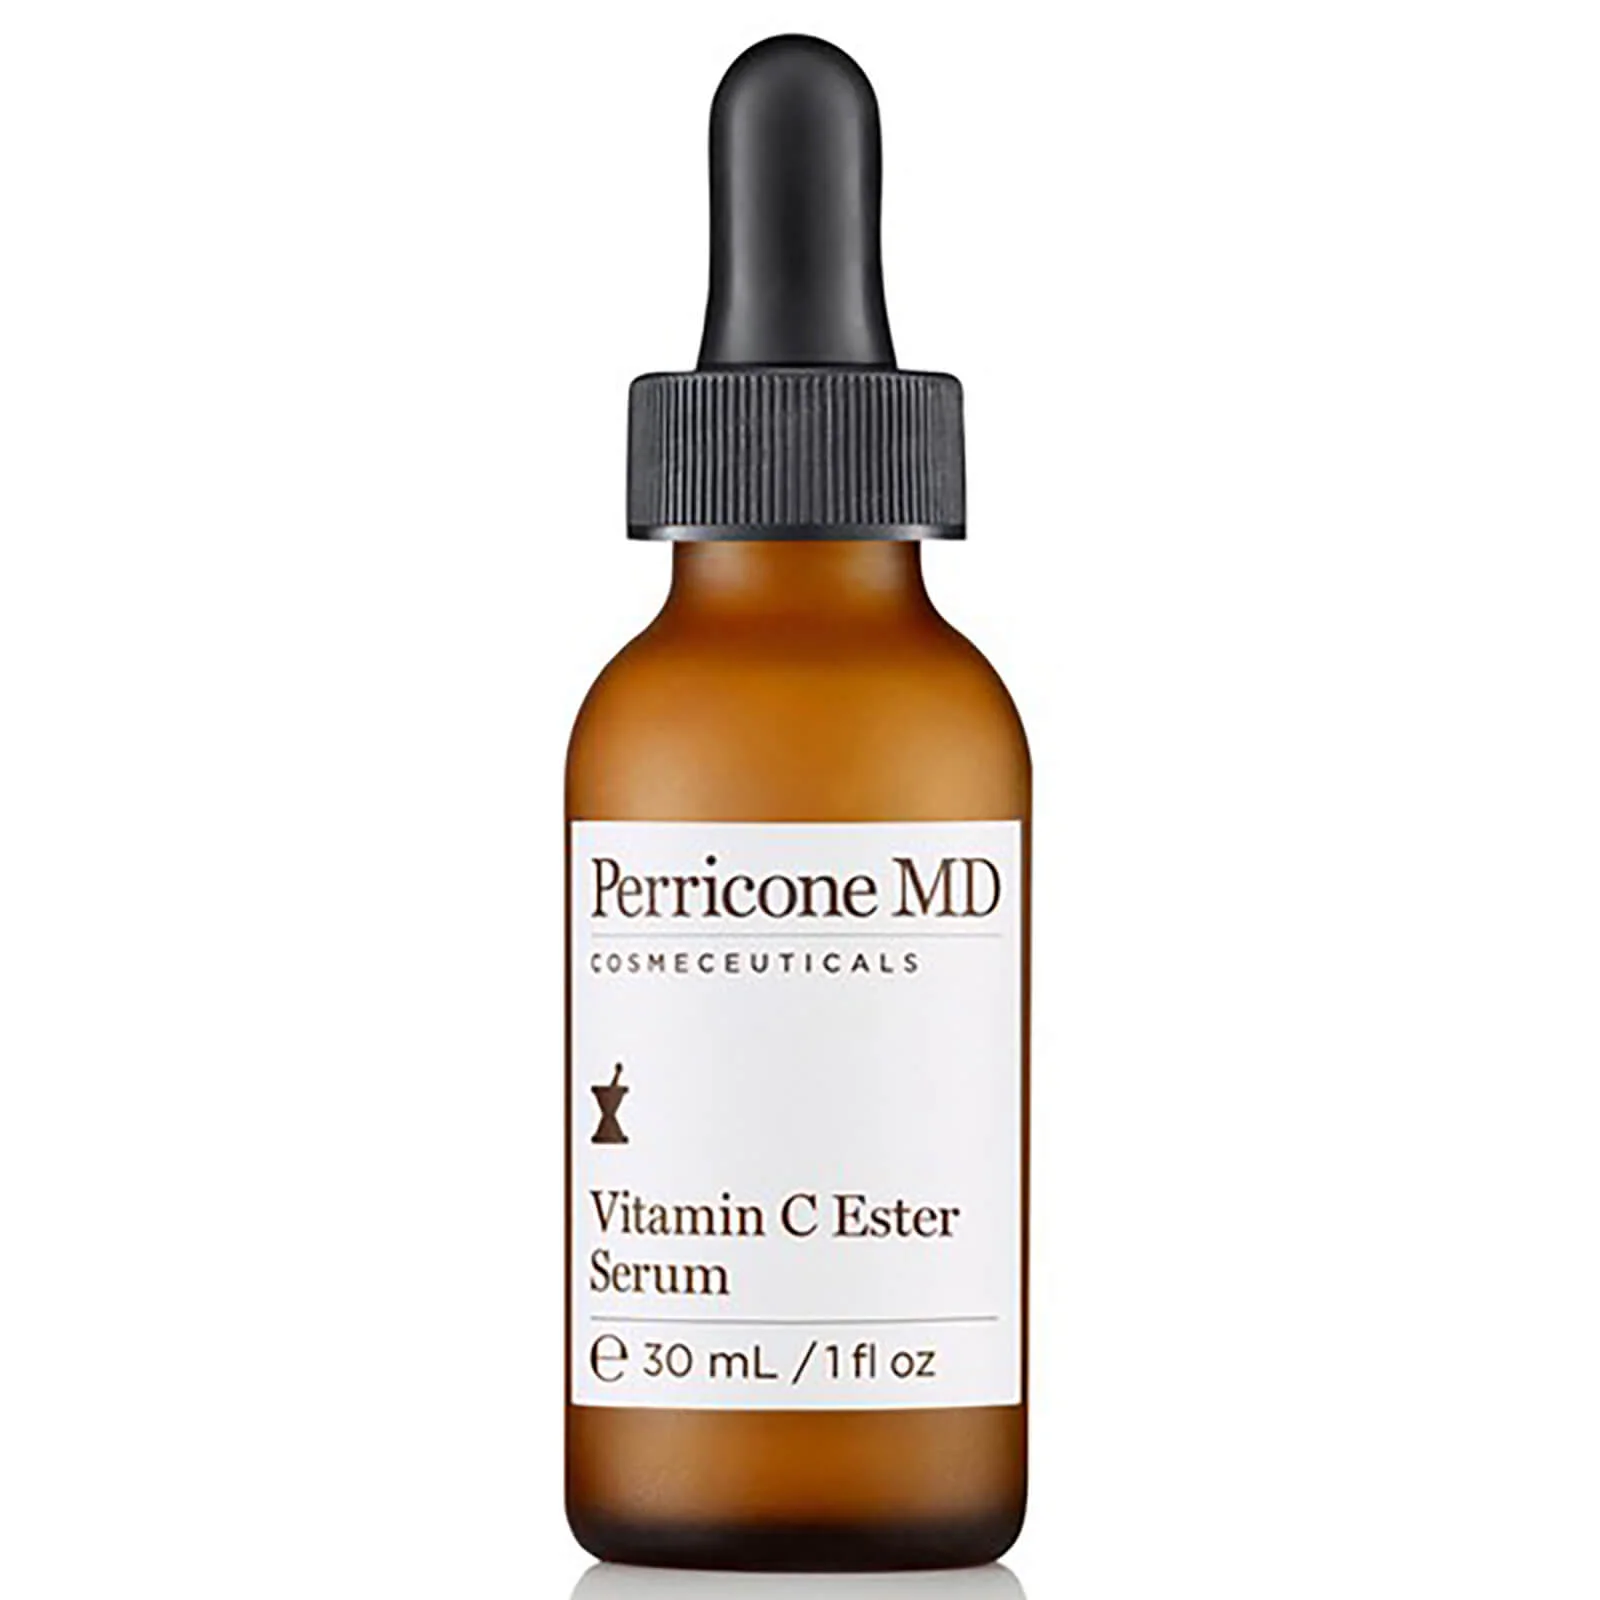 Perricone MD Vitamin C Ester Serum (30ml) Image 1